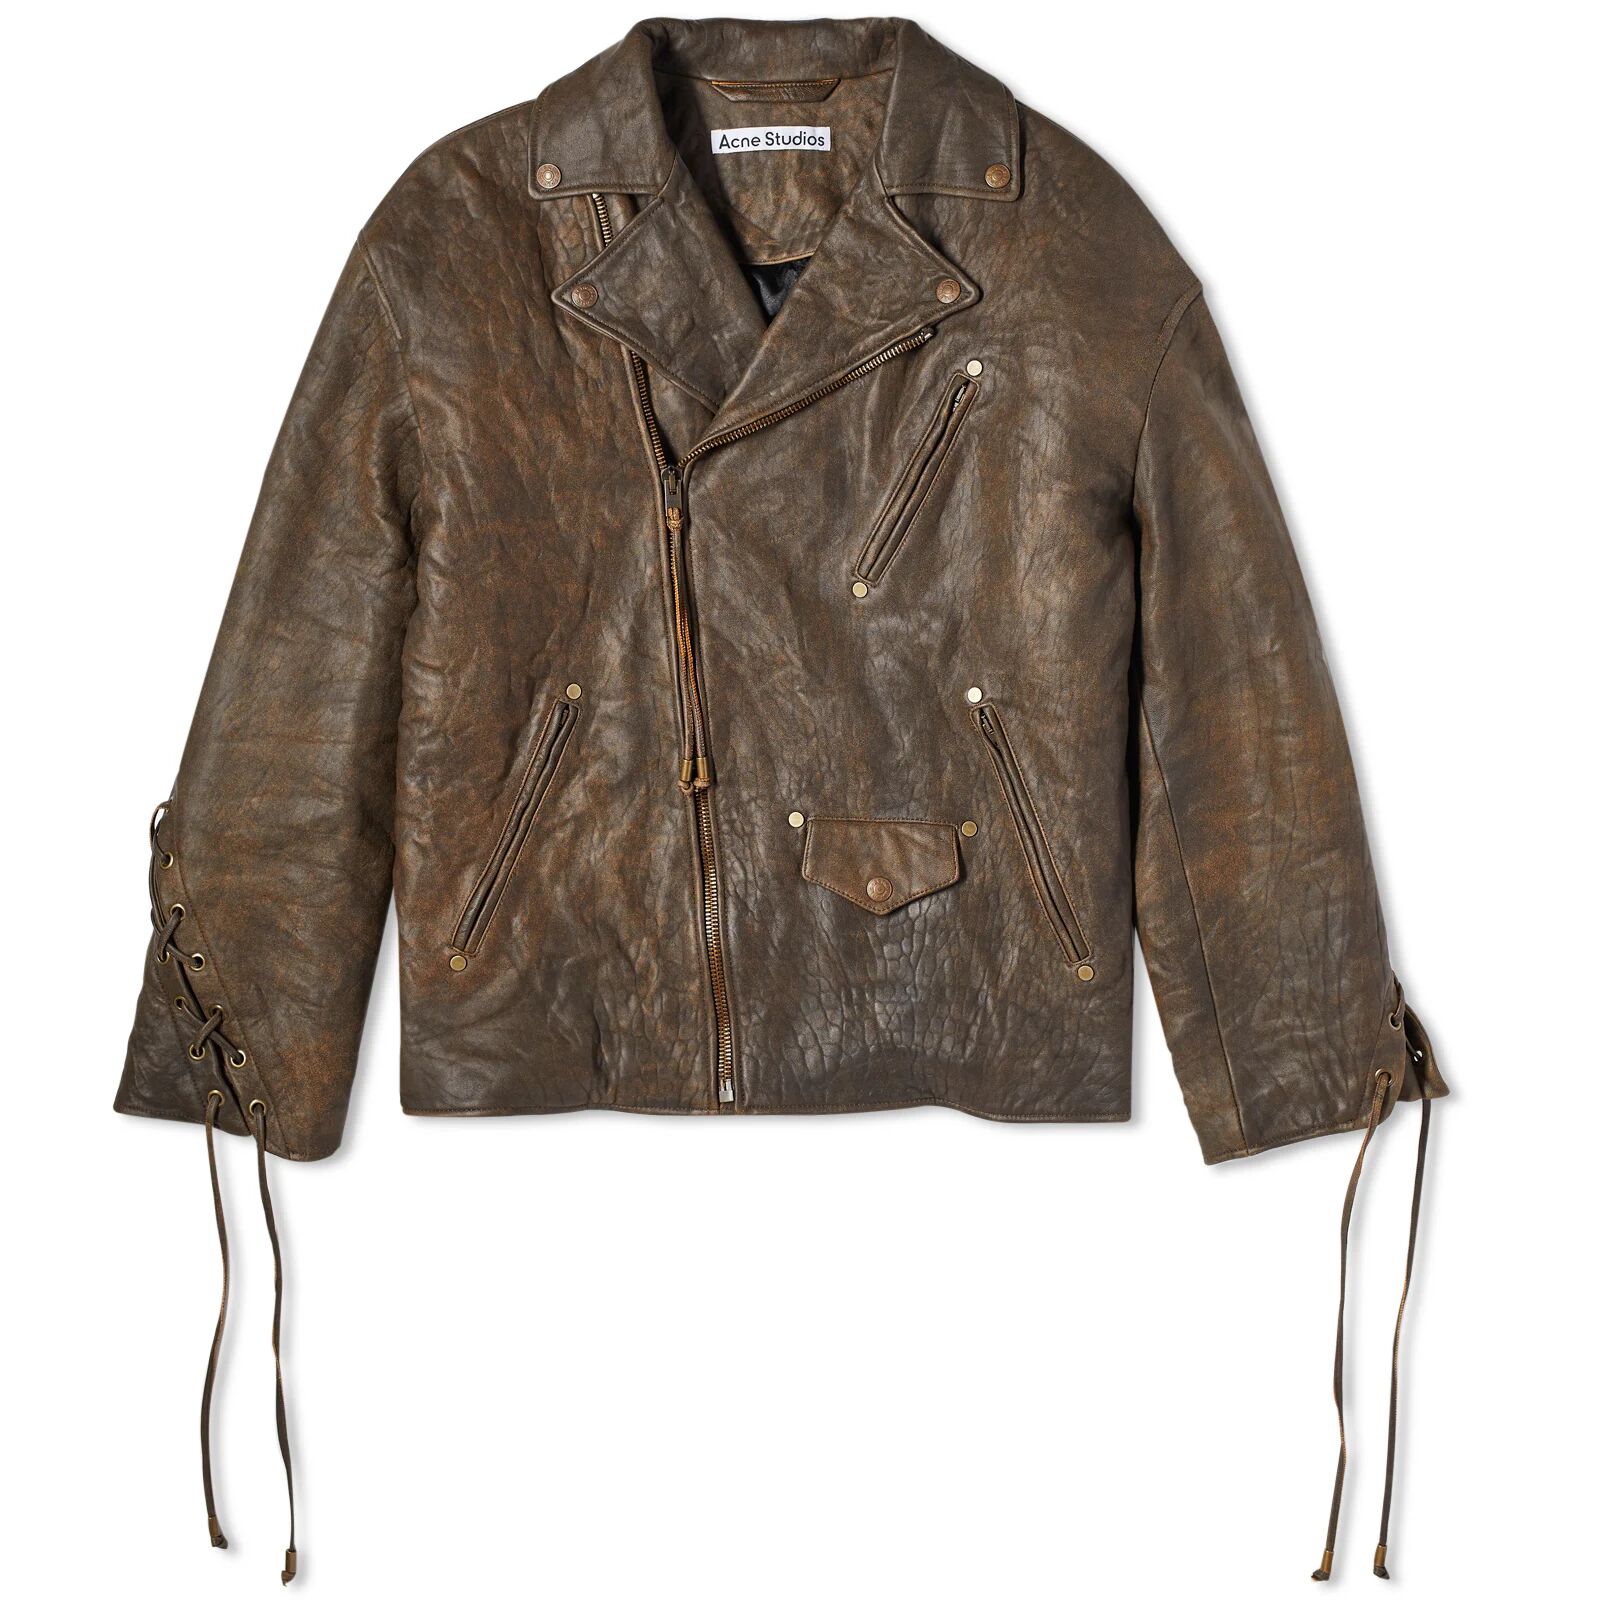 Acne Studios Men's Likero Vintage Leather Jacket in Brown, Size Large